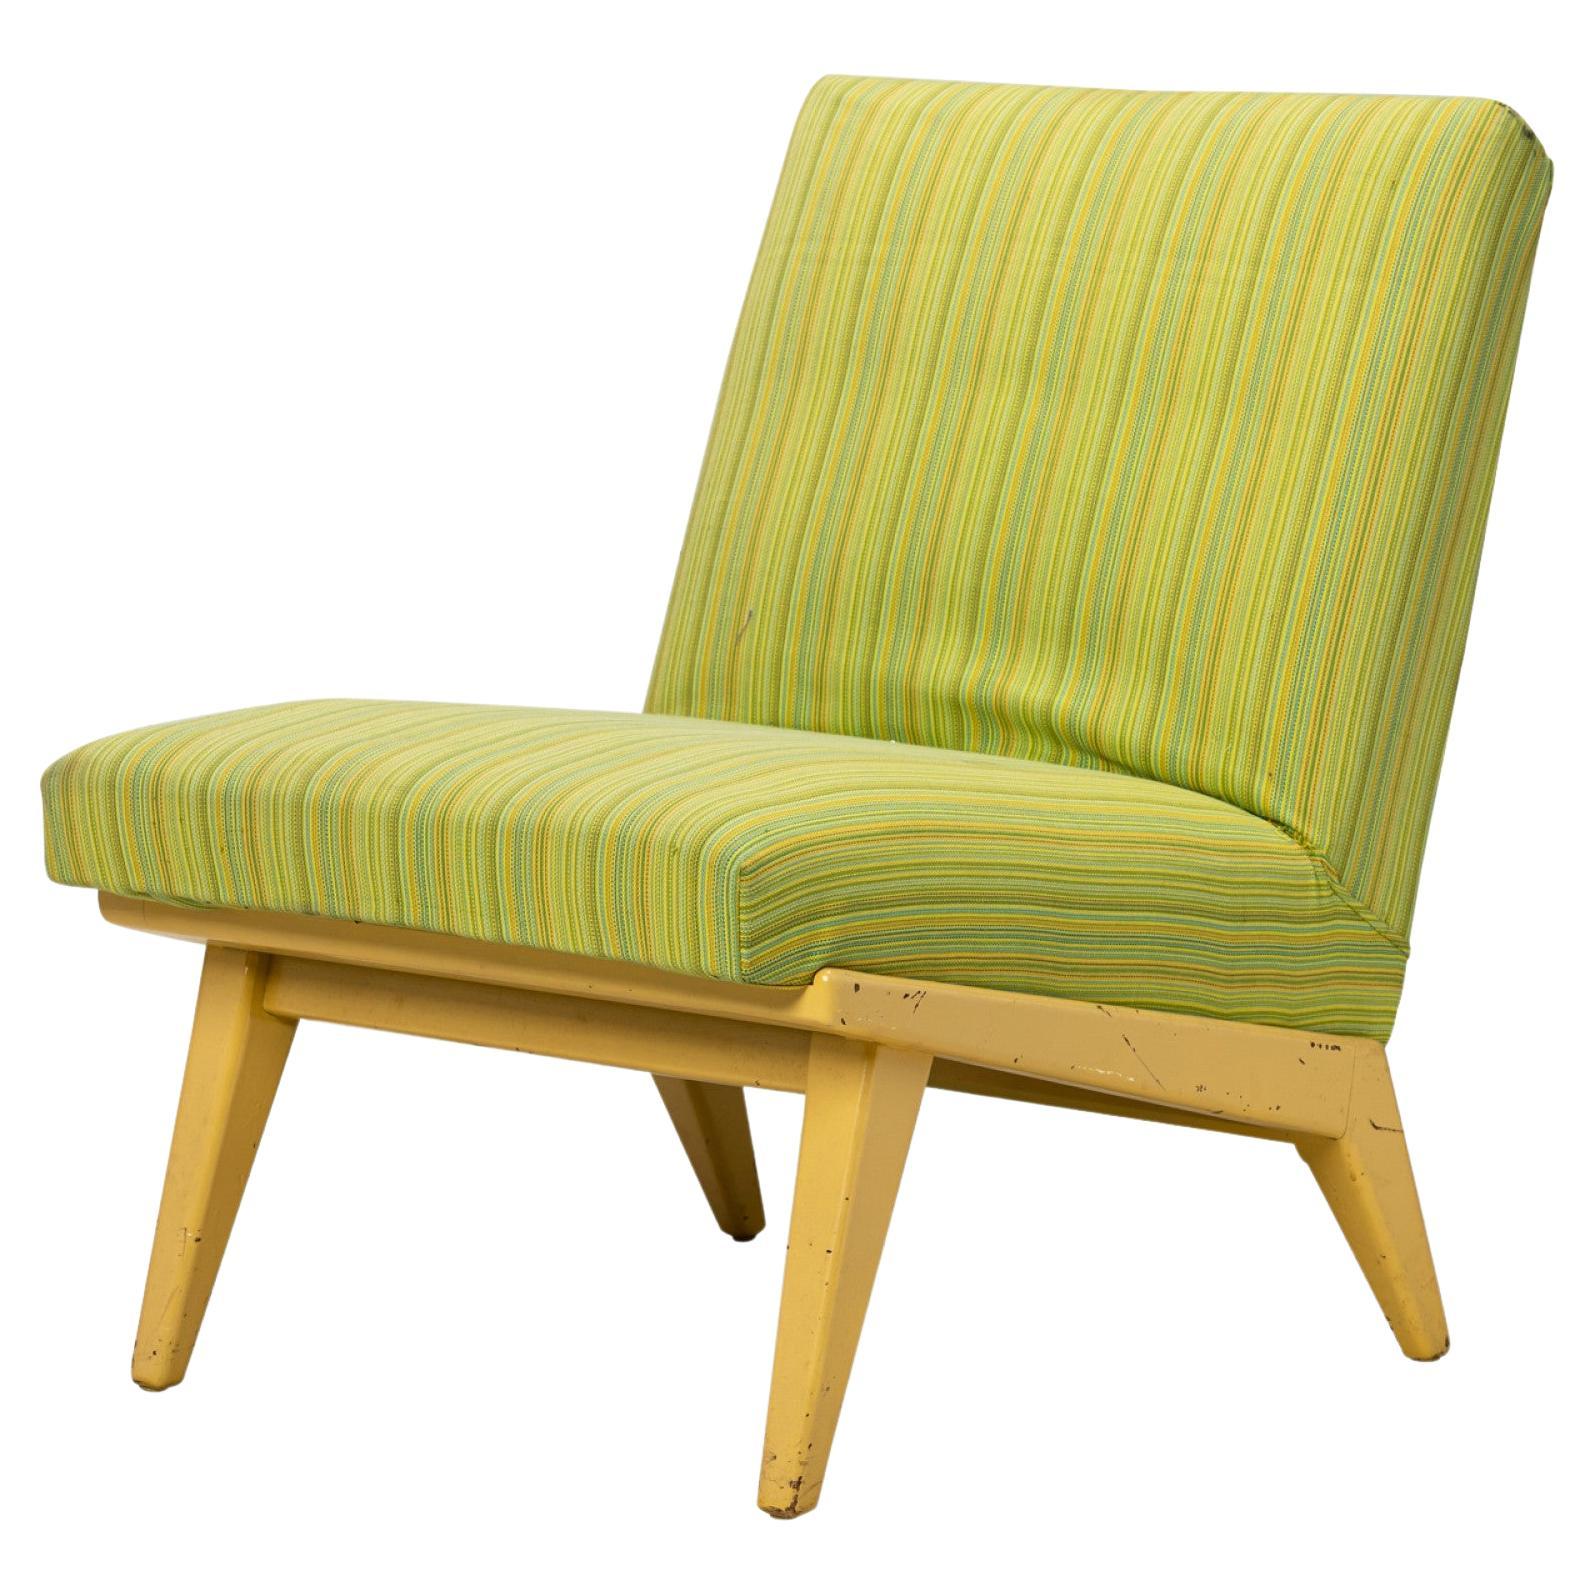 Jens Risom for Knoll Lime Green Striped Upholstered Blonde Wood Slipper For Sale